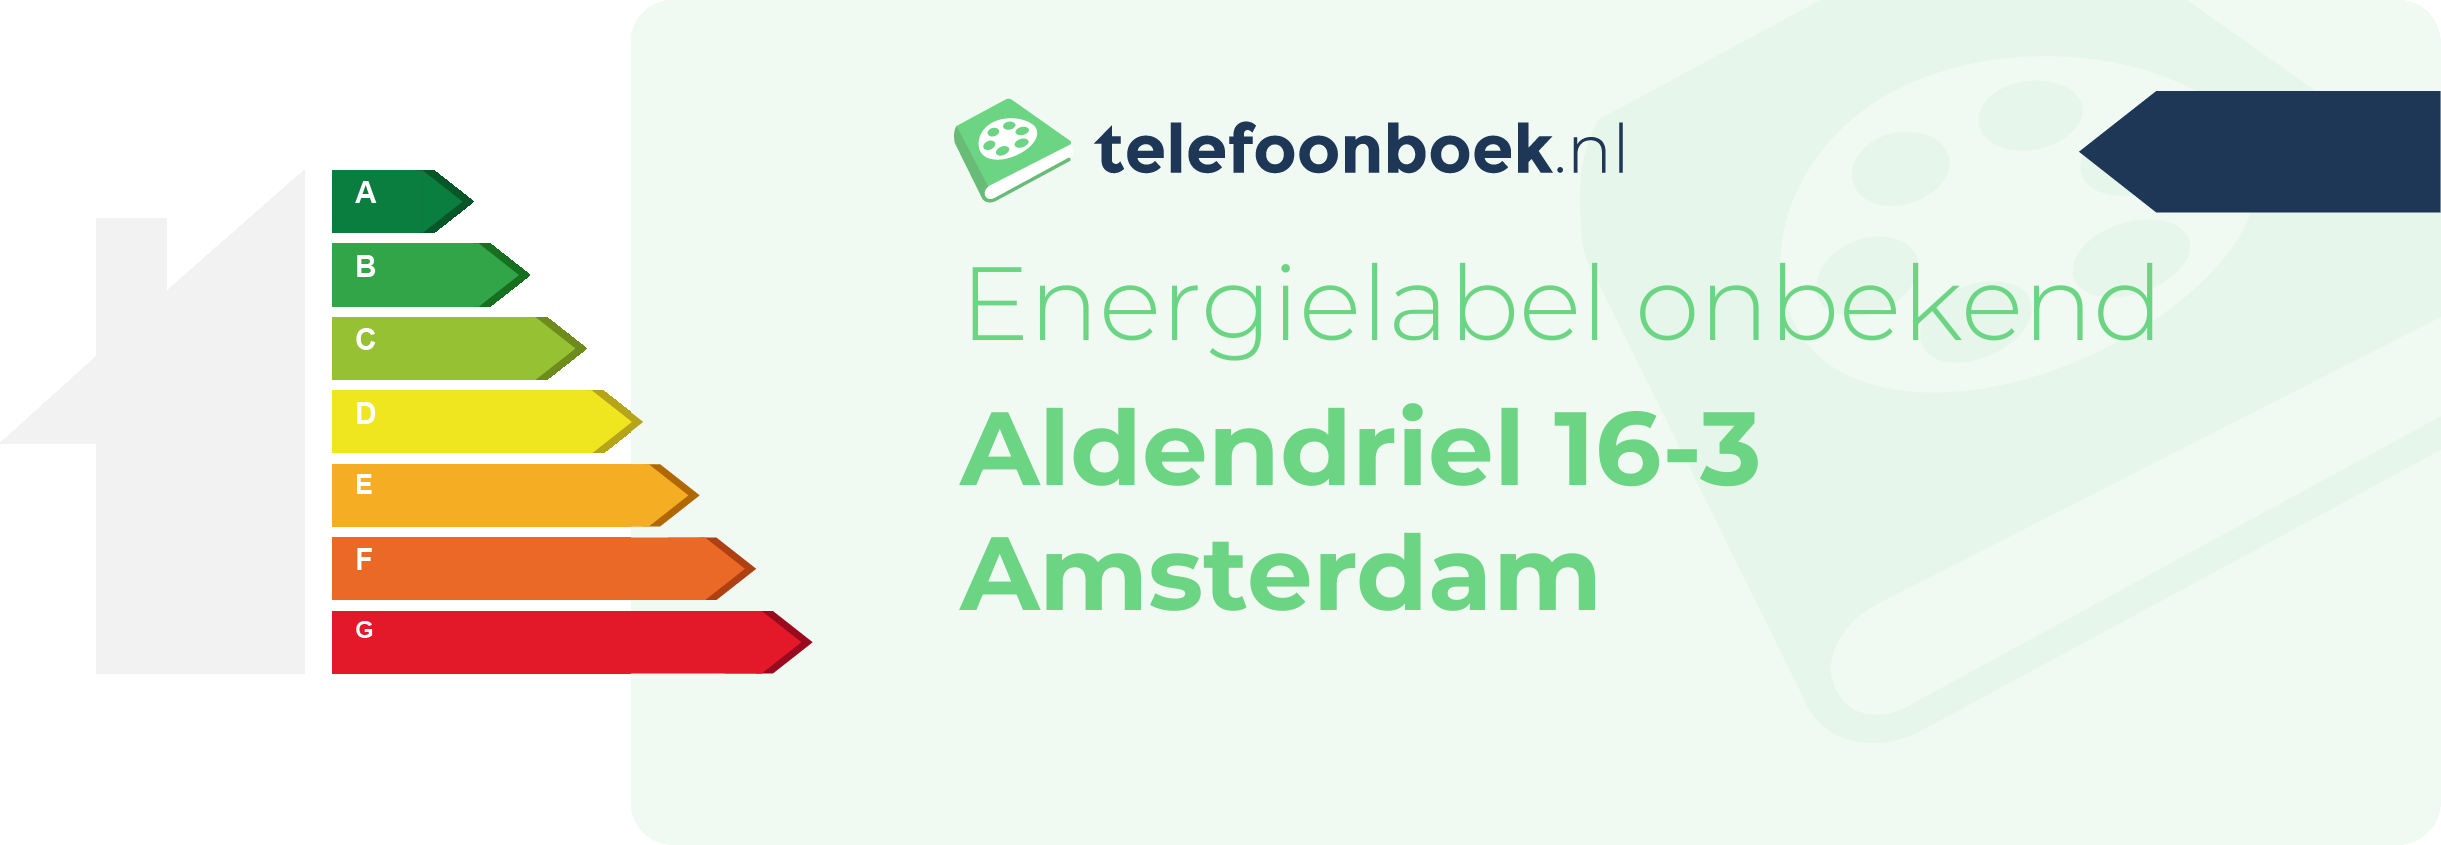 Energielabel Aldendriel 16-3 Amsterdam